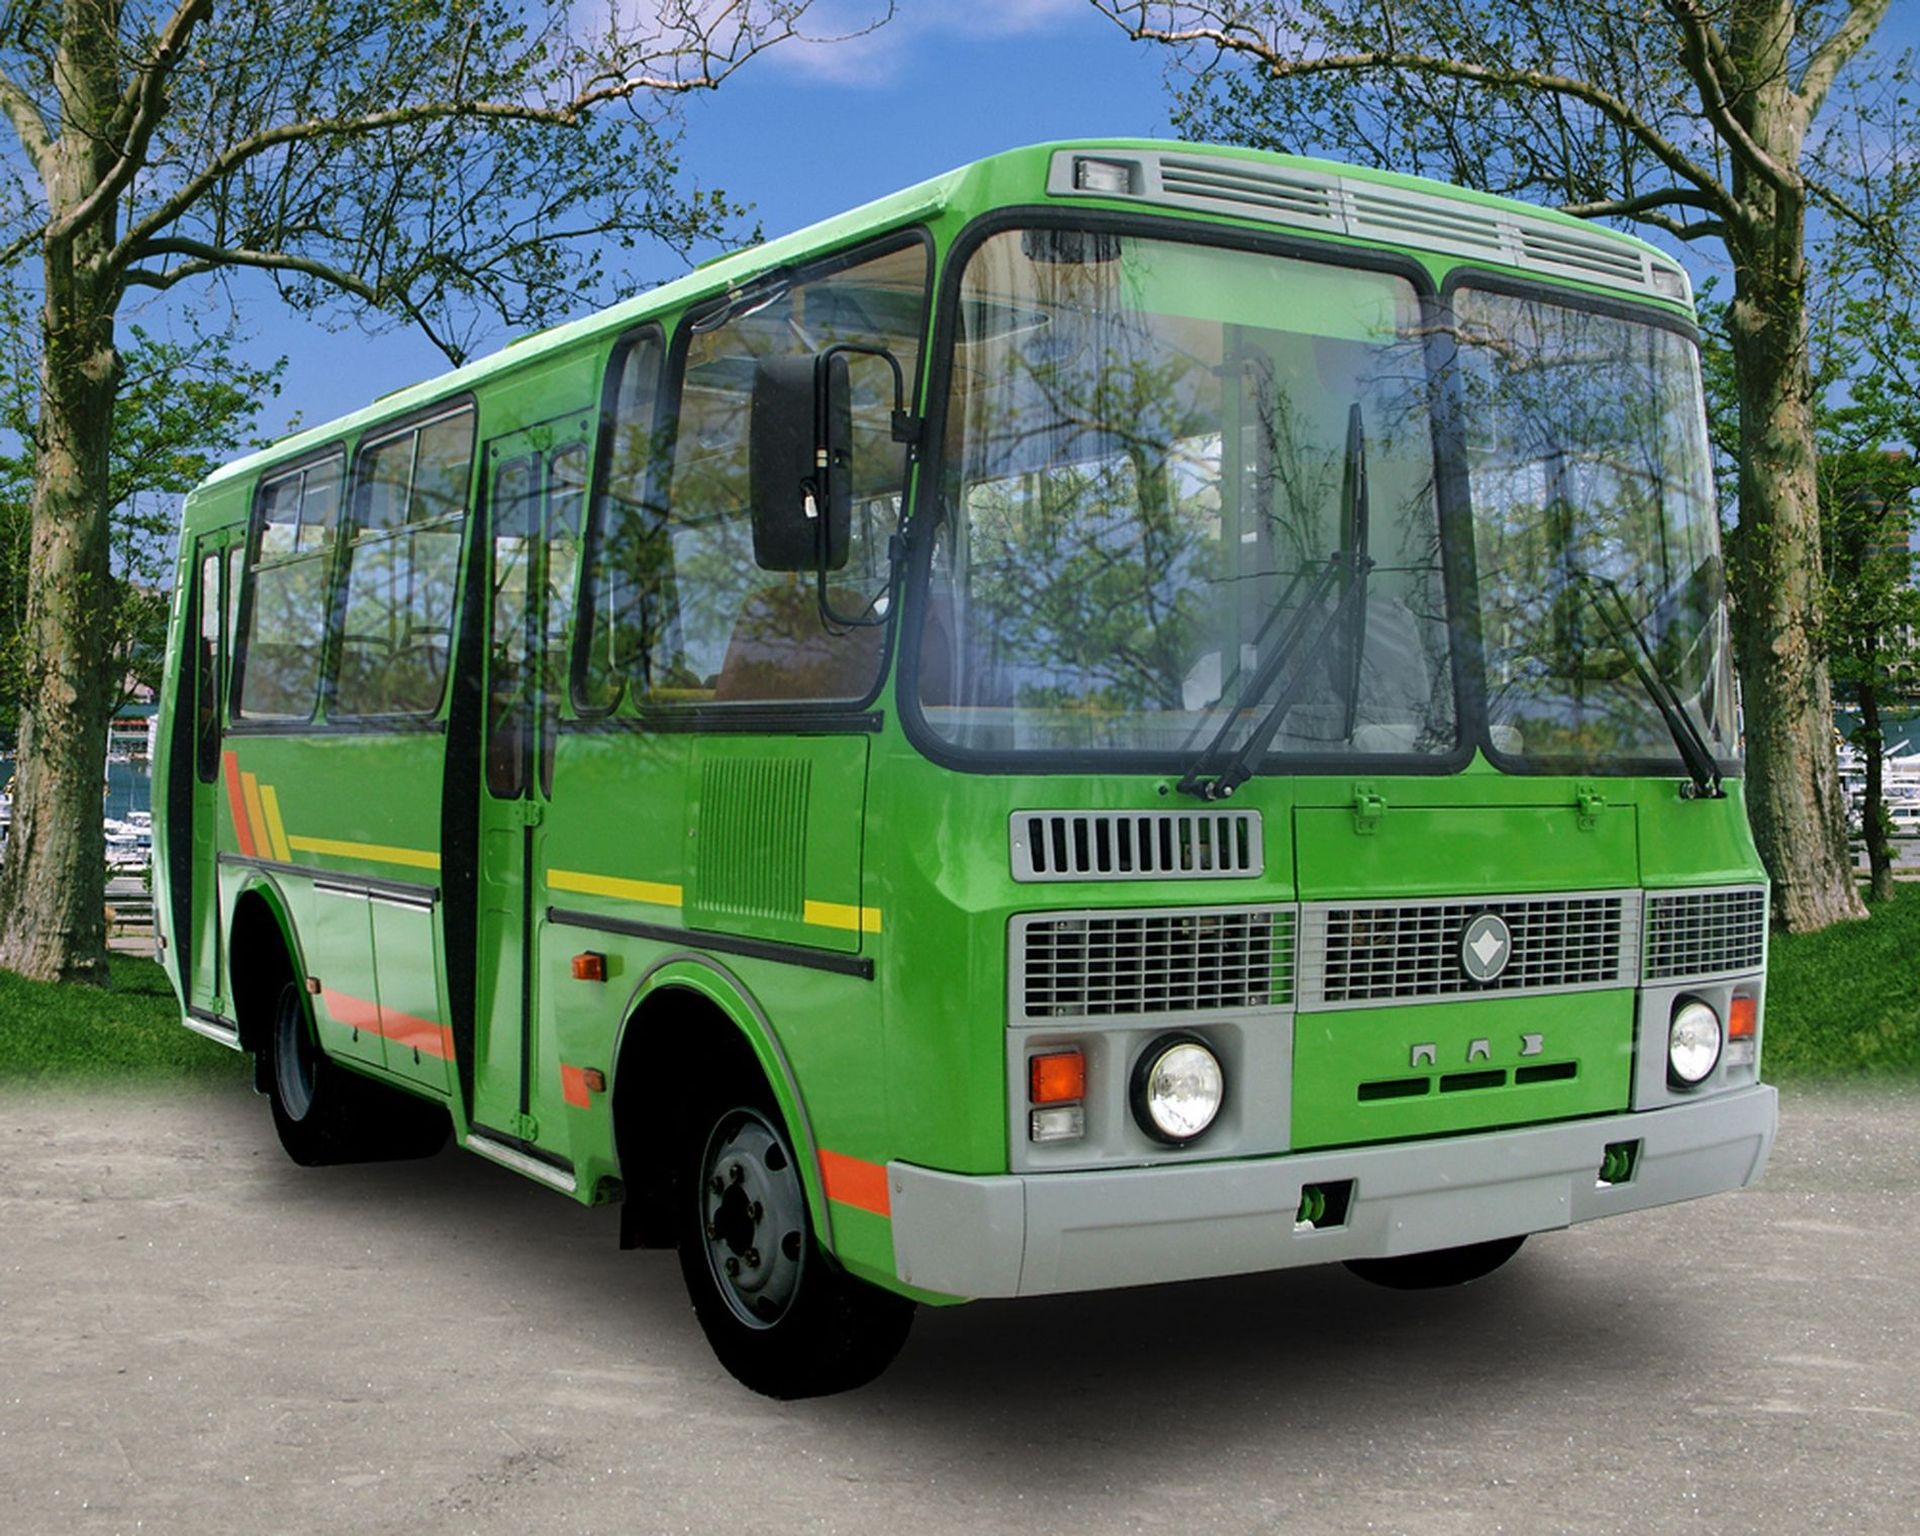 Ремонт автобусов паз. ПАЗ 32054. ПАЗ 32054 зеленый. Пассажирский автобус ПАЗ 32054. ПАЗ-3205 новый.